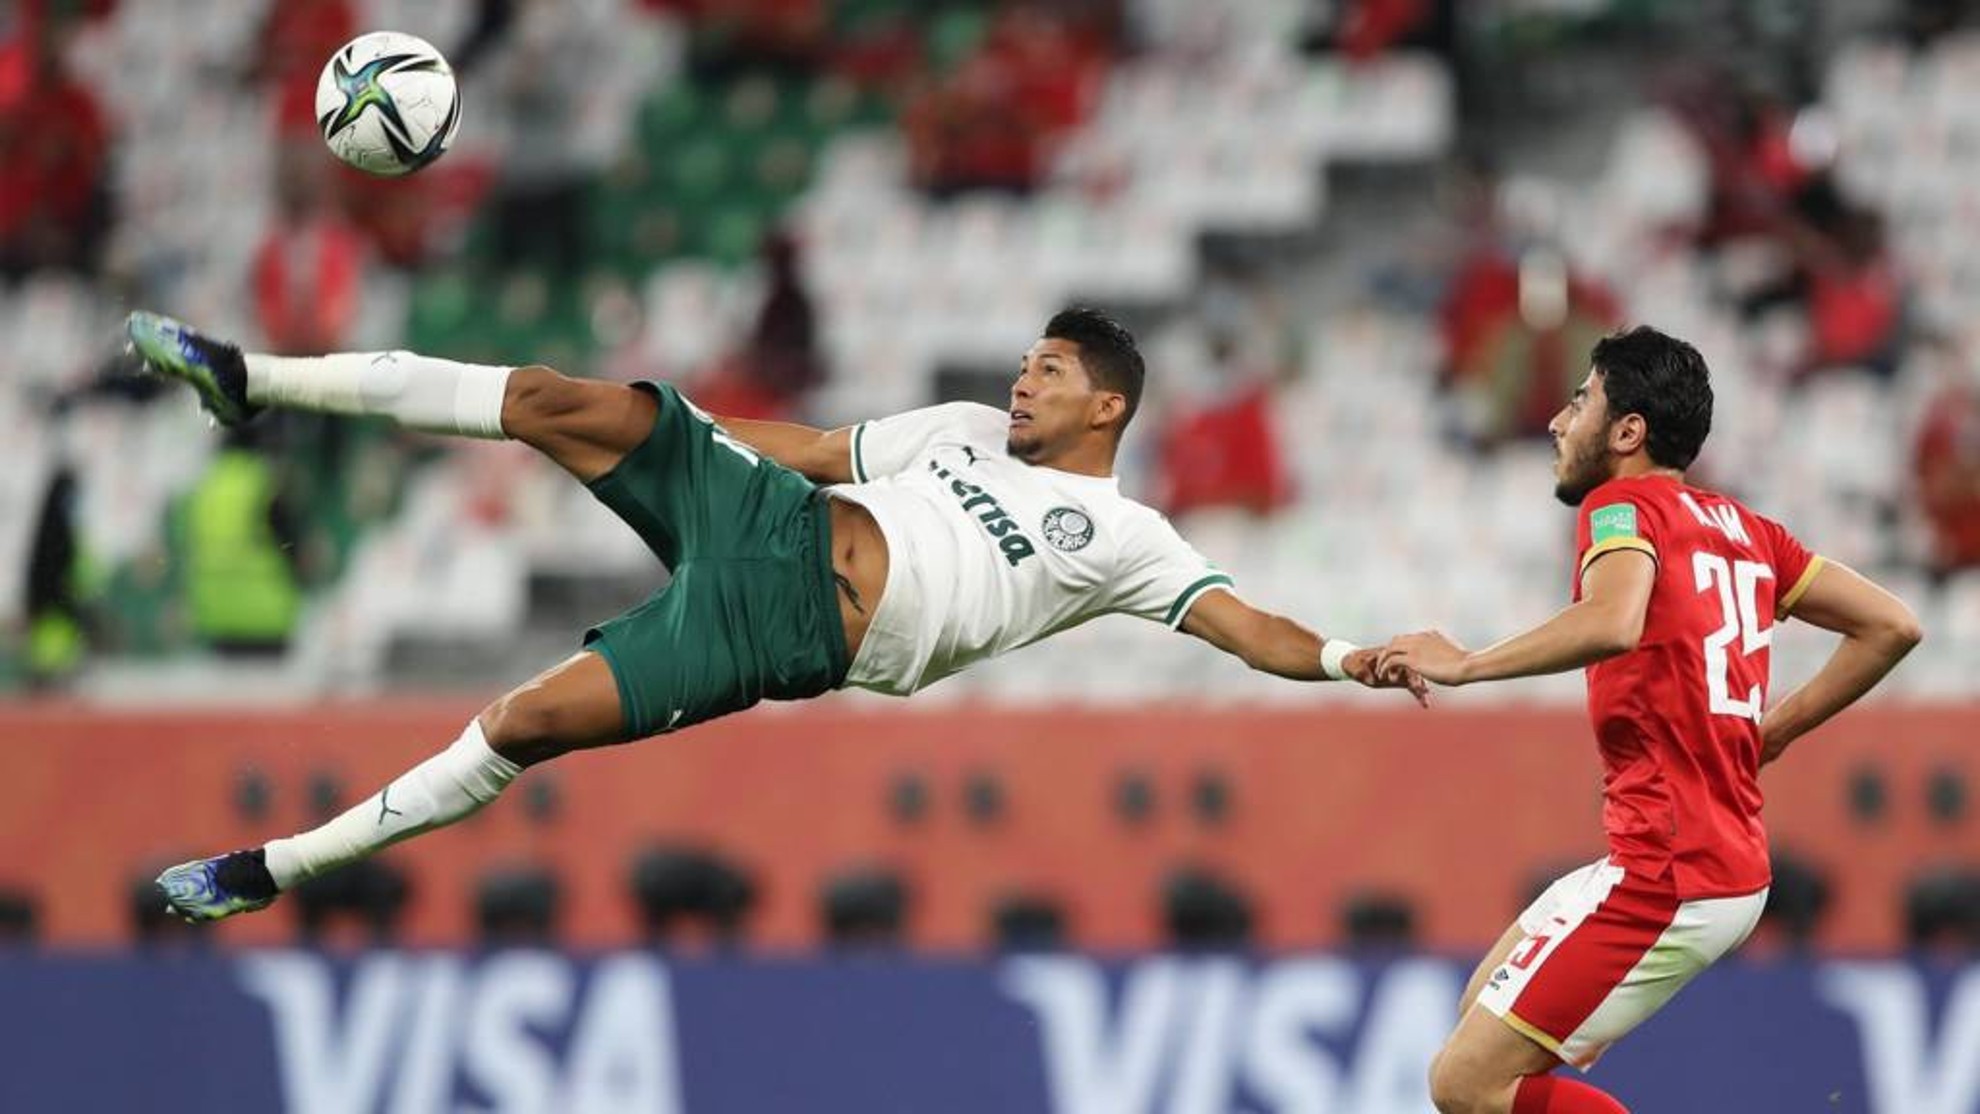 Palmeiras - Al Ahly en directo